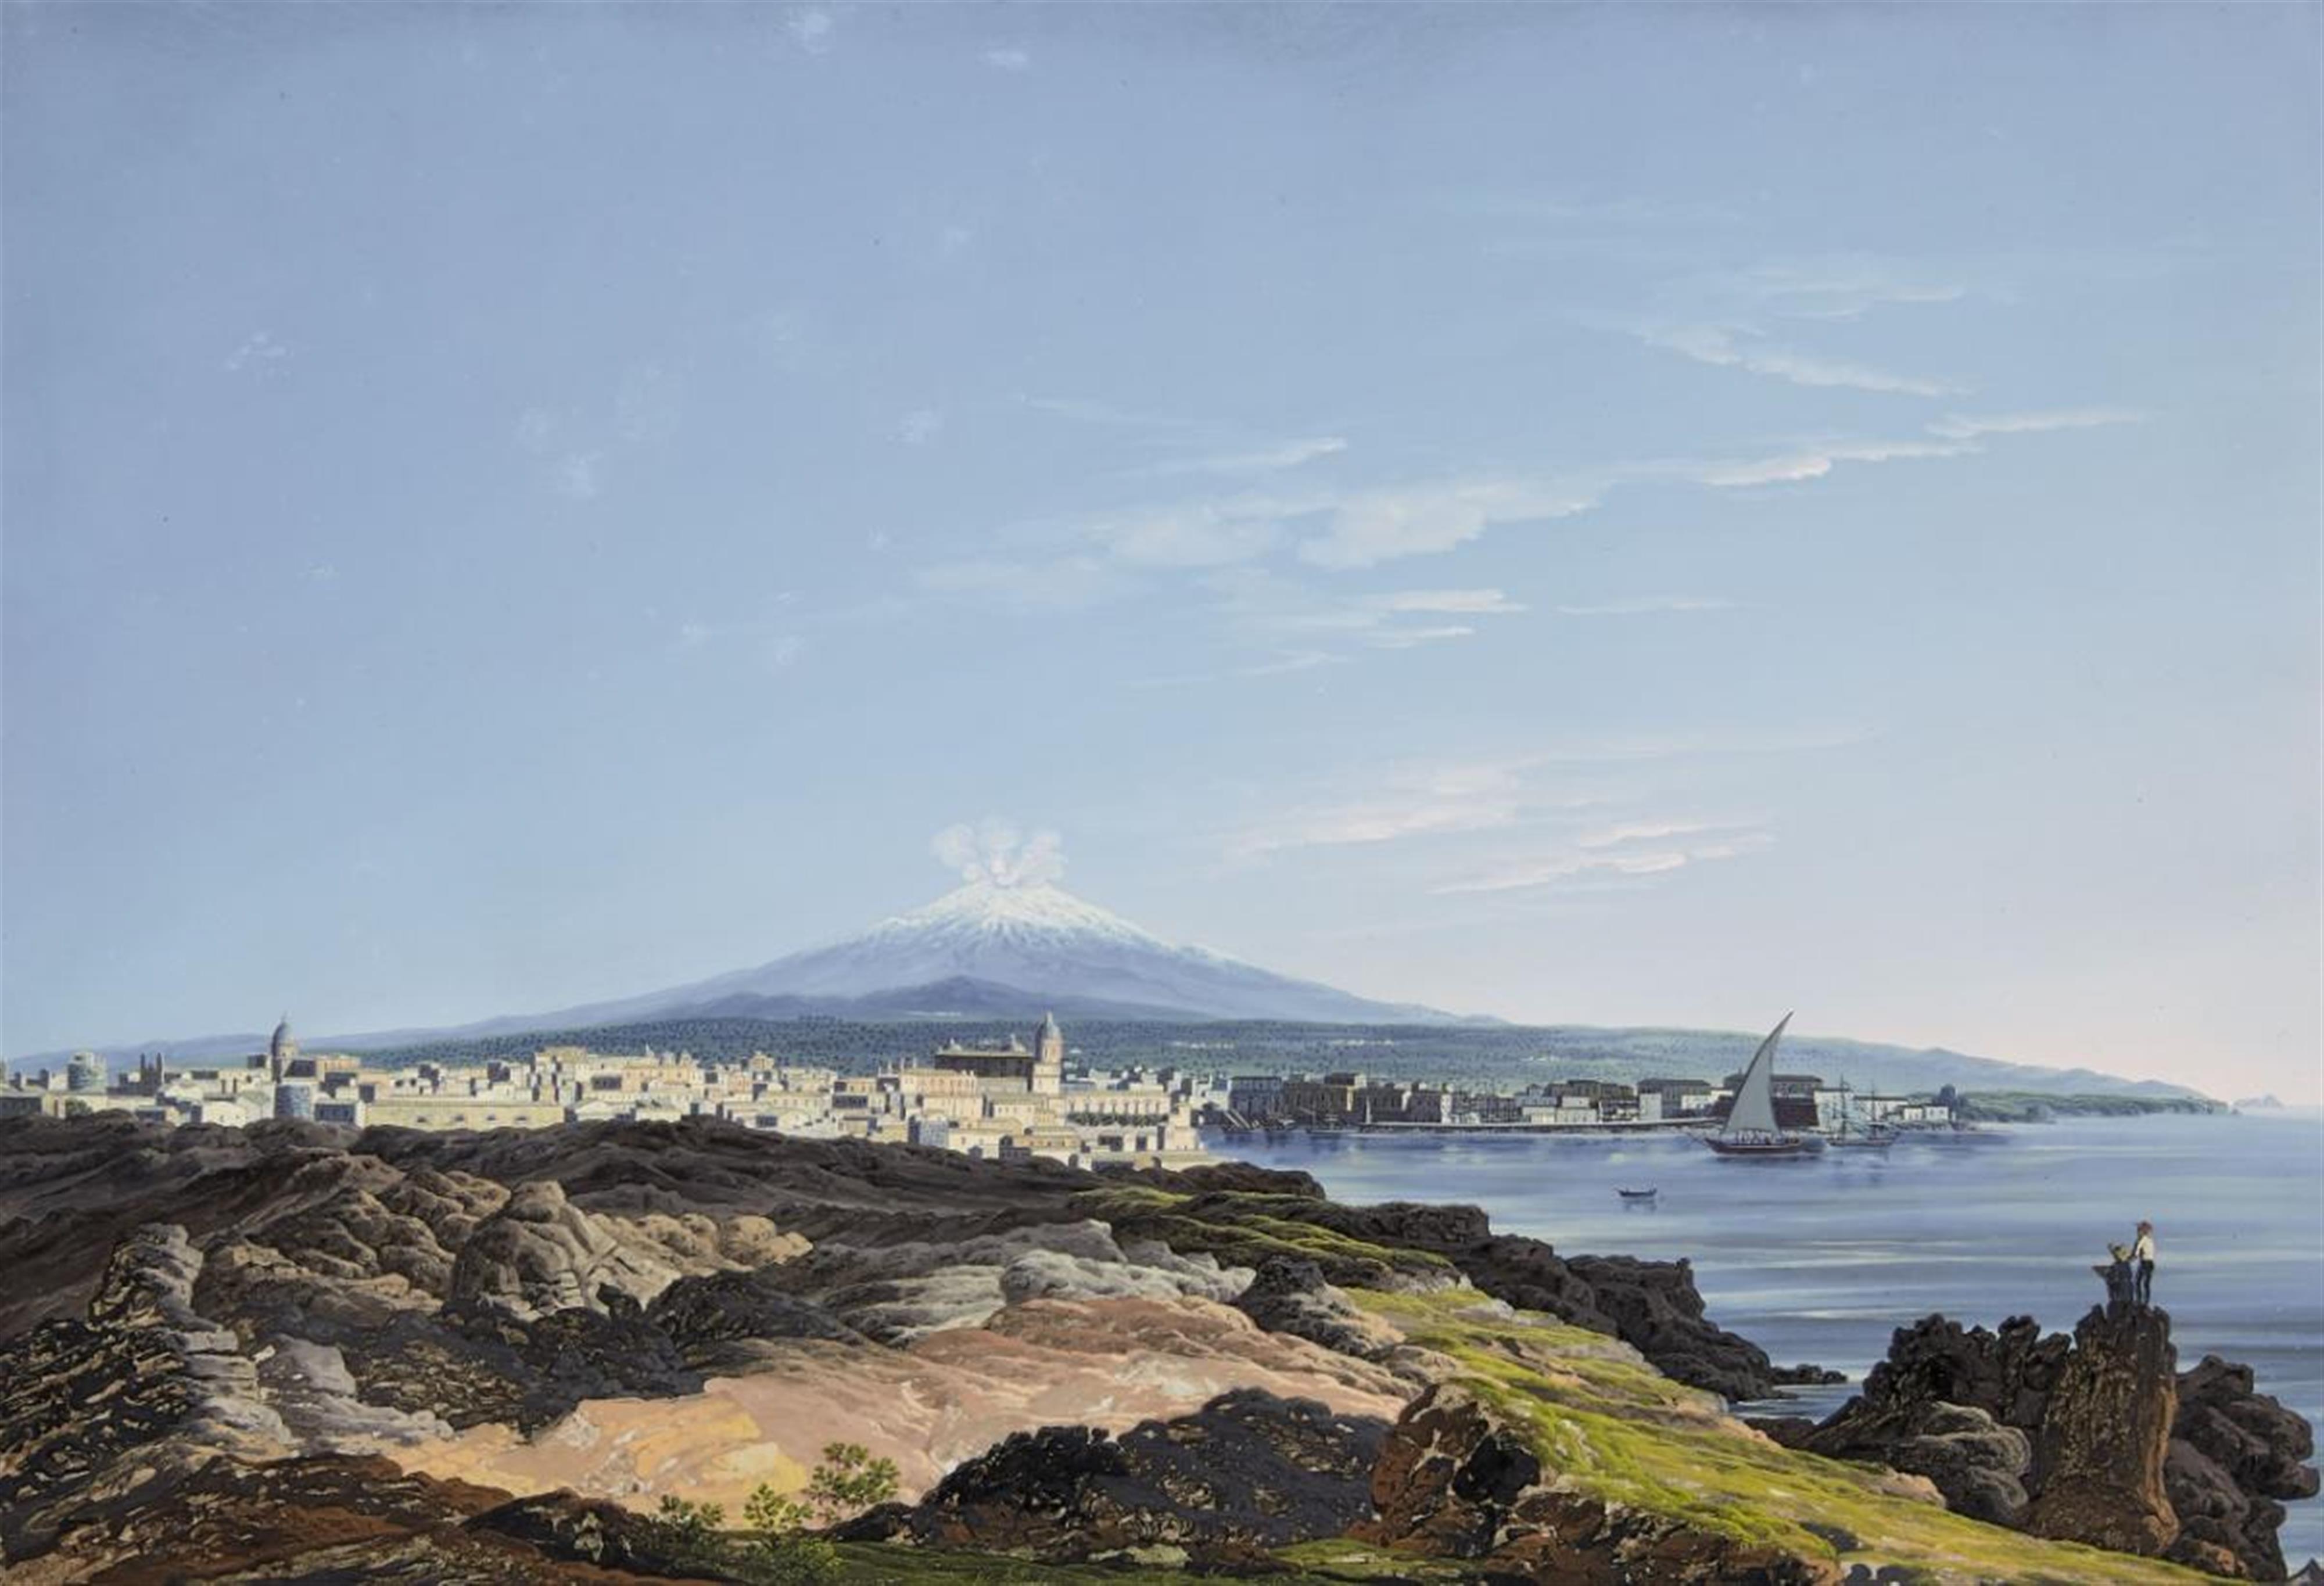 Francesco Zerillo - A View of Mount Etna and the Bay of Catania